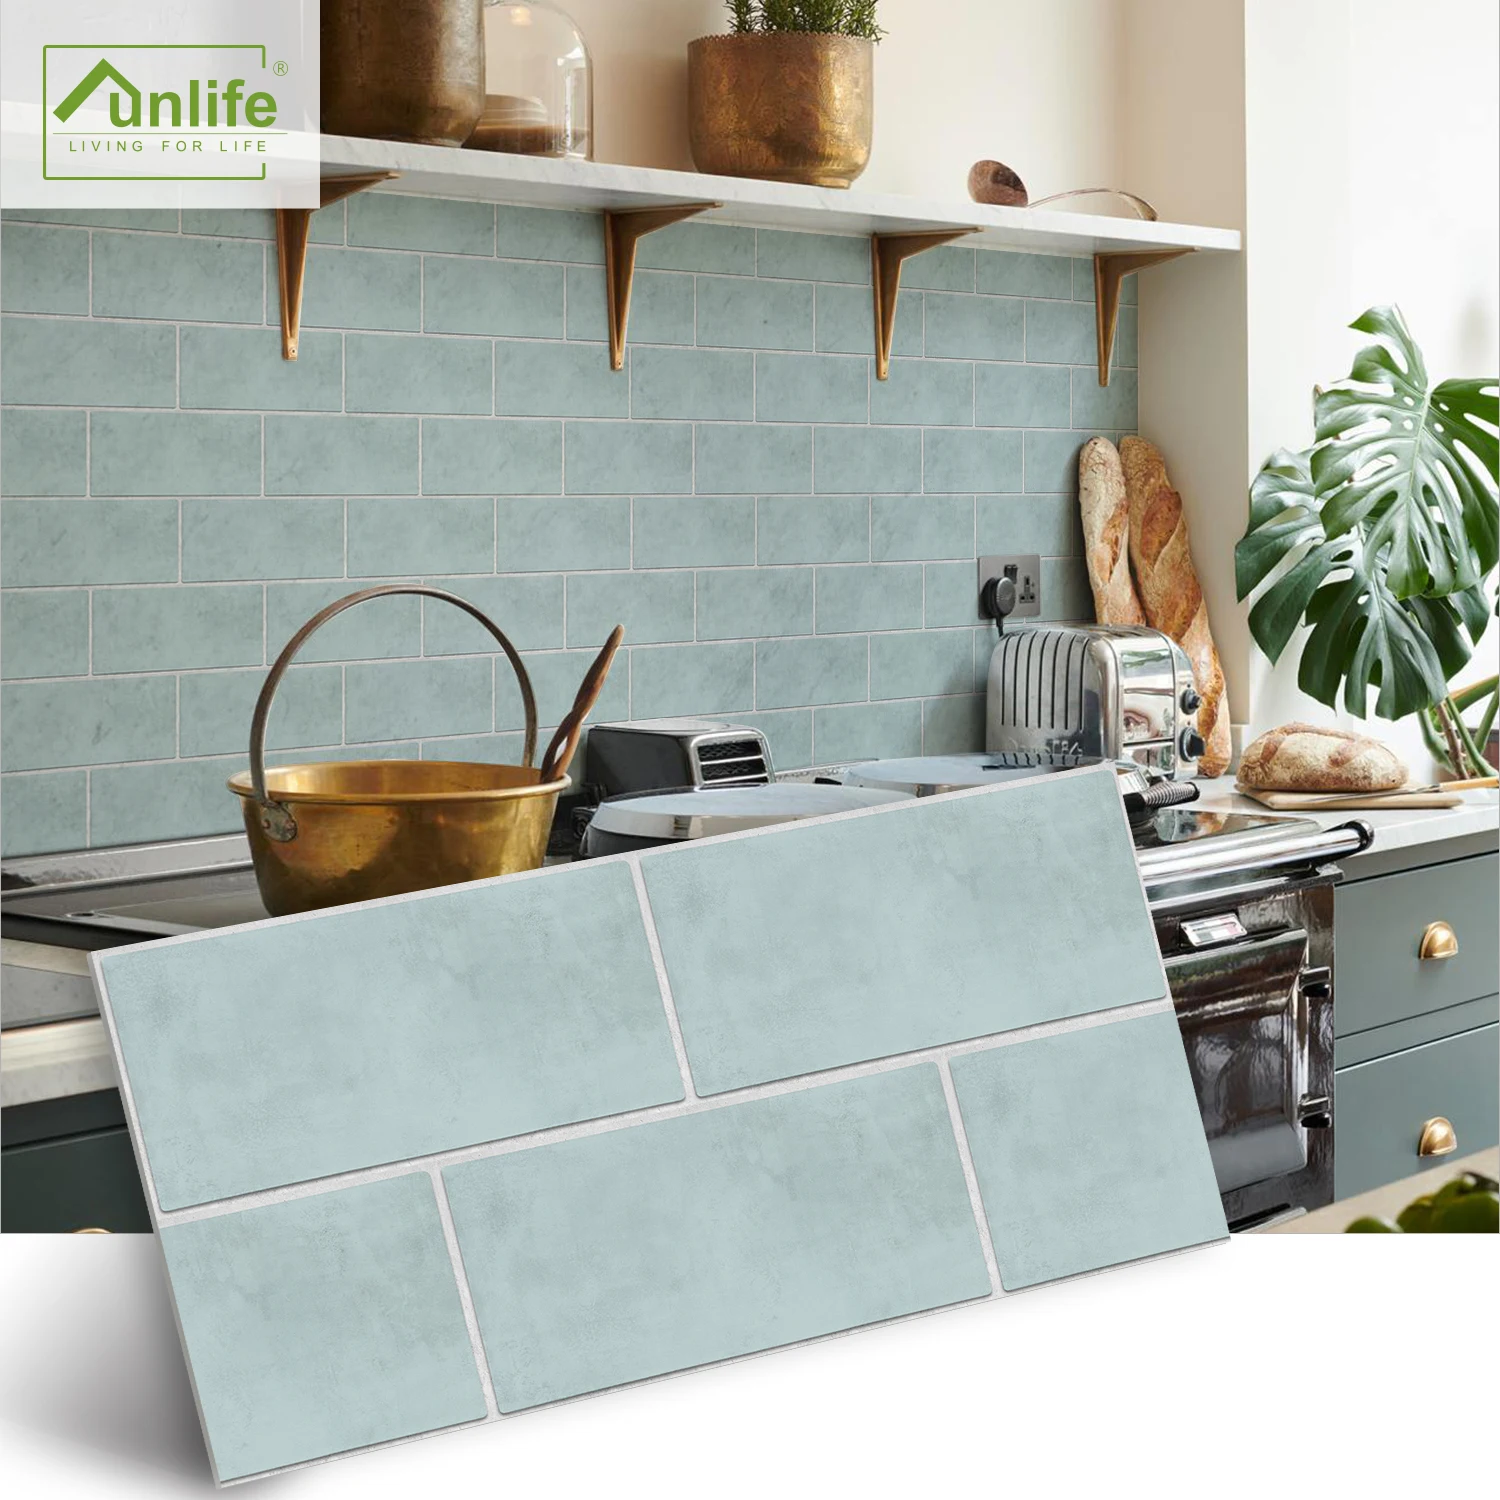 

Funlife® 30x15cm Seafoam Green Thick Waterproof Tile Sticker Self-adhesive Wall Stickers Fireplace Kitchen Backsplash Home Decor